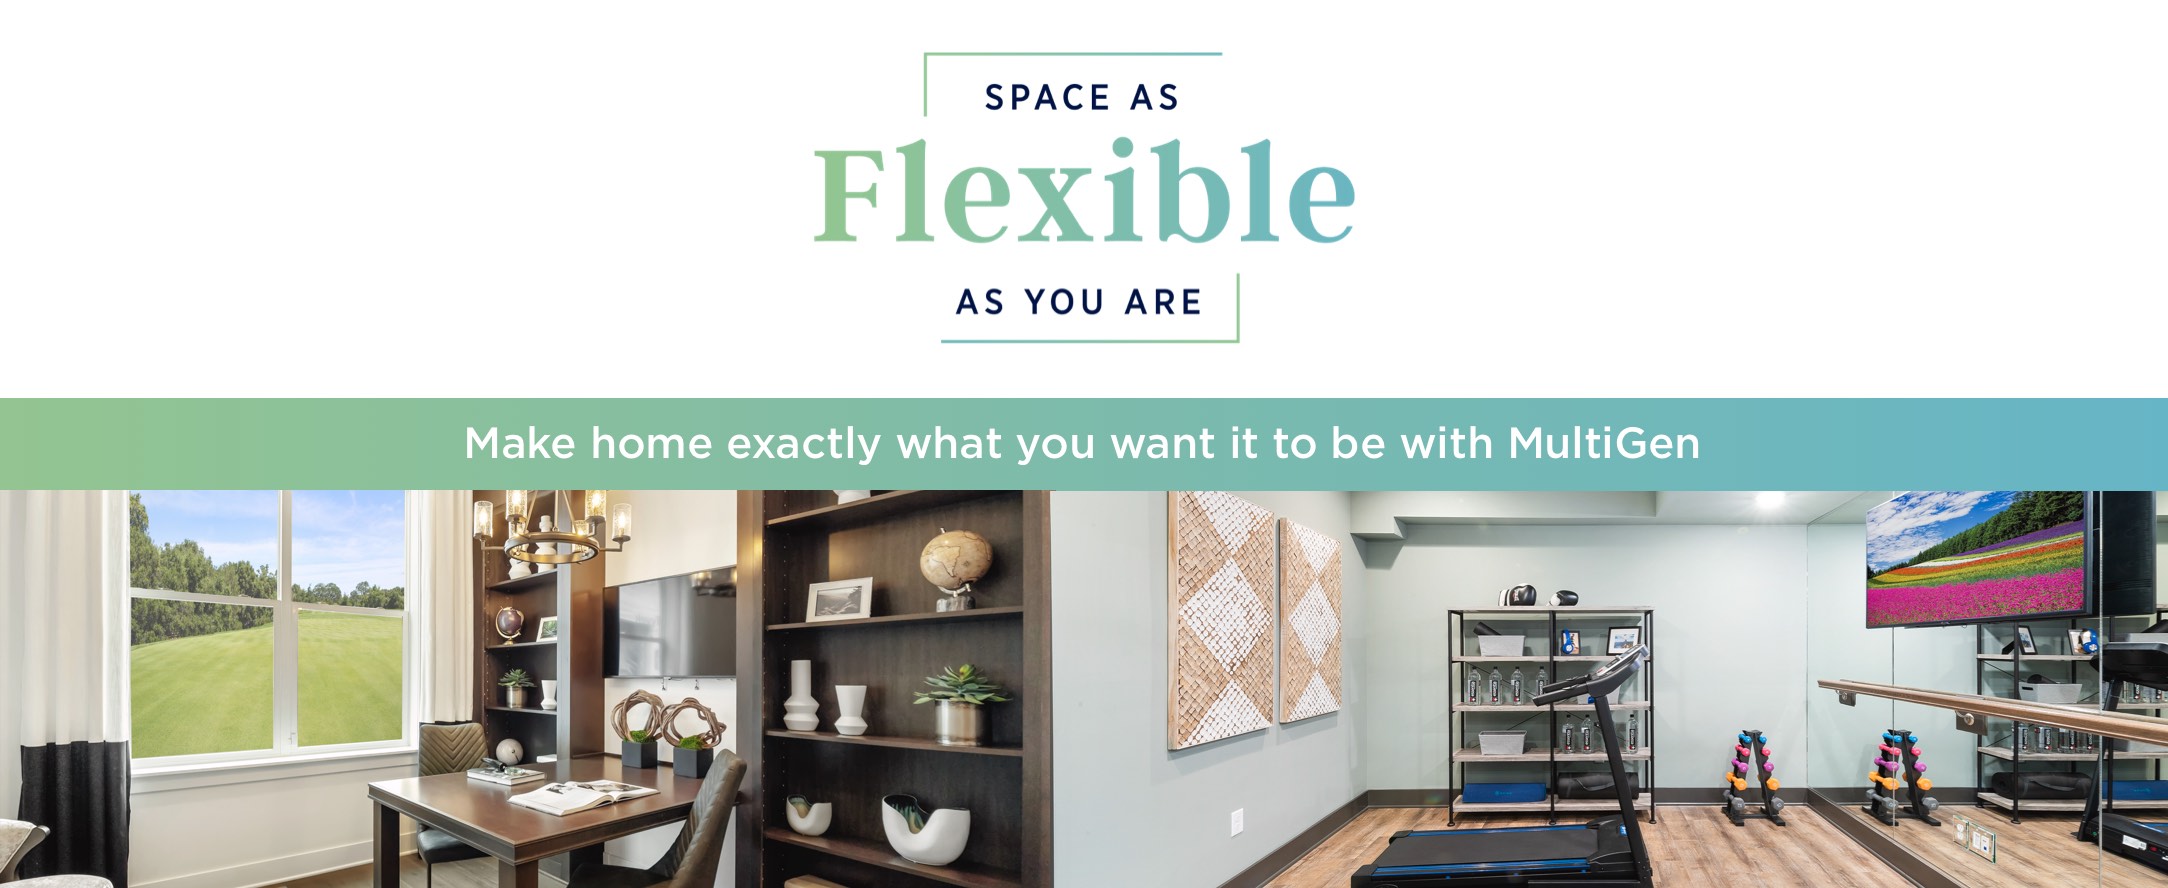 Flexible Space